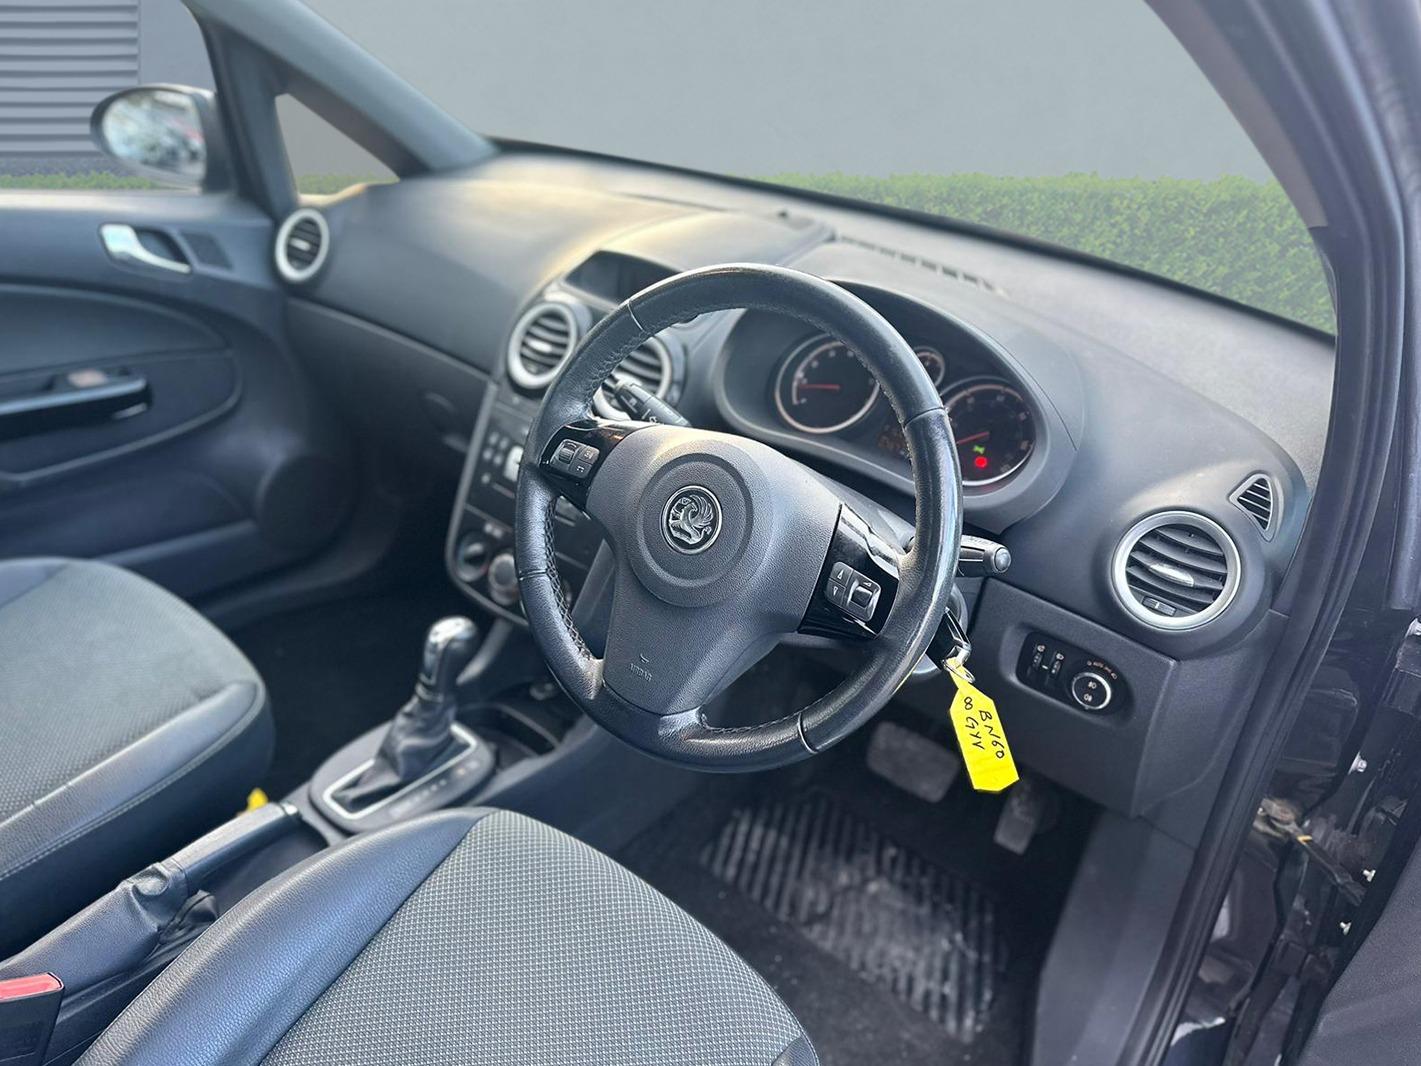 Vauxhall Corsa 1.4i 16v SE Hatchback 5dr Petrol Automatic (a/c) (138 g/km, 99 bhp)